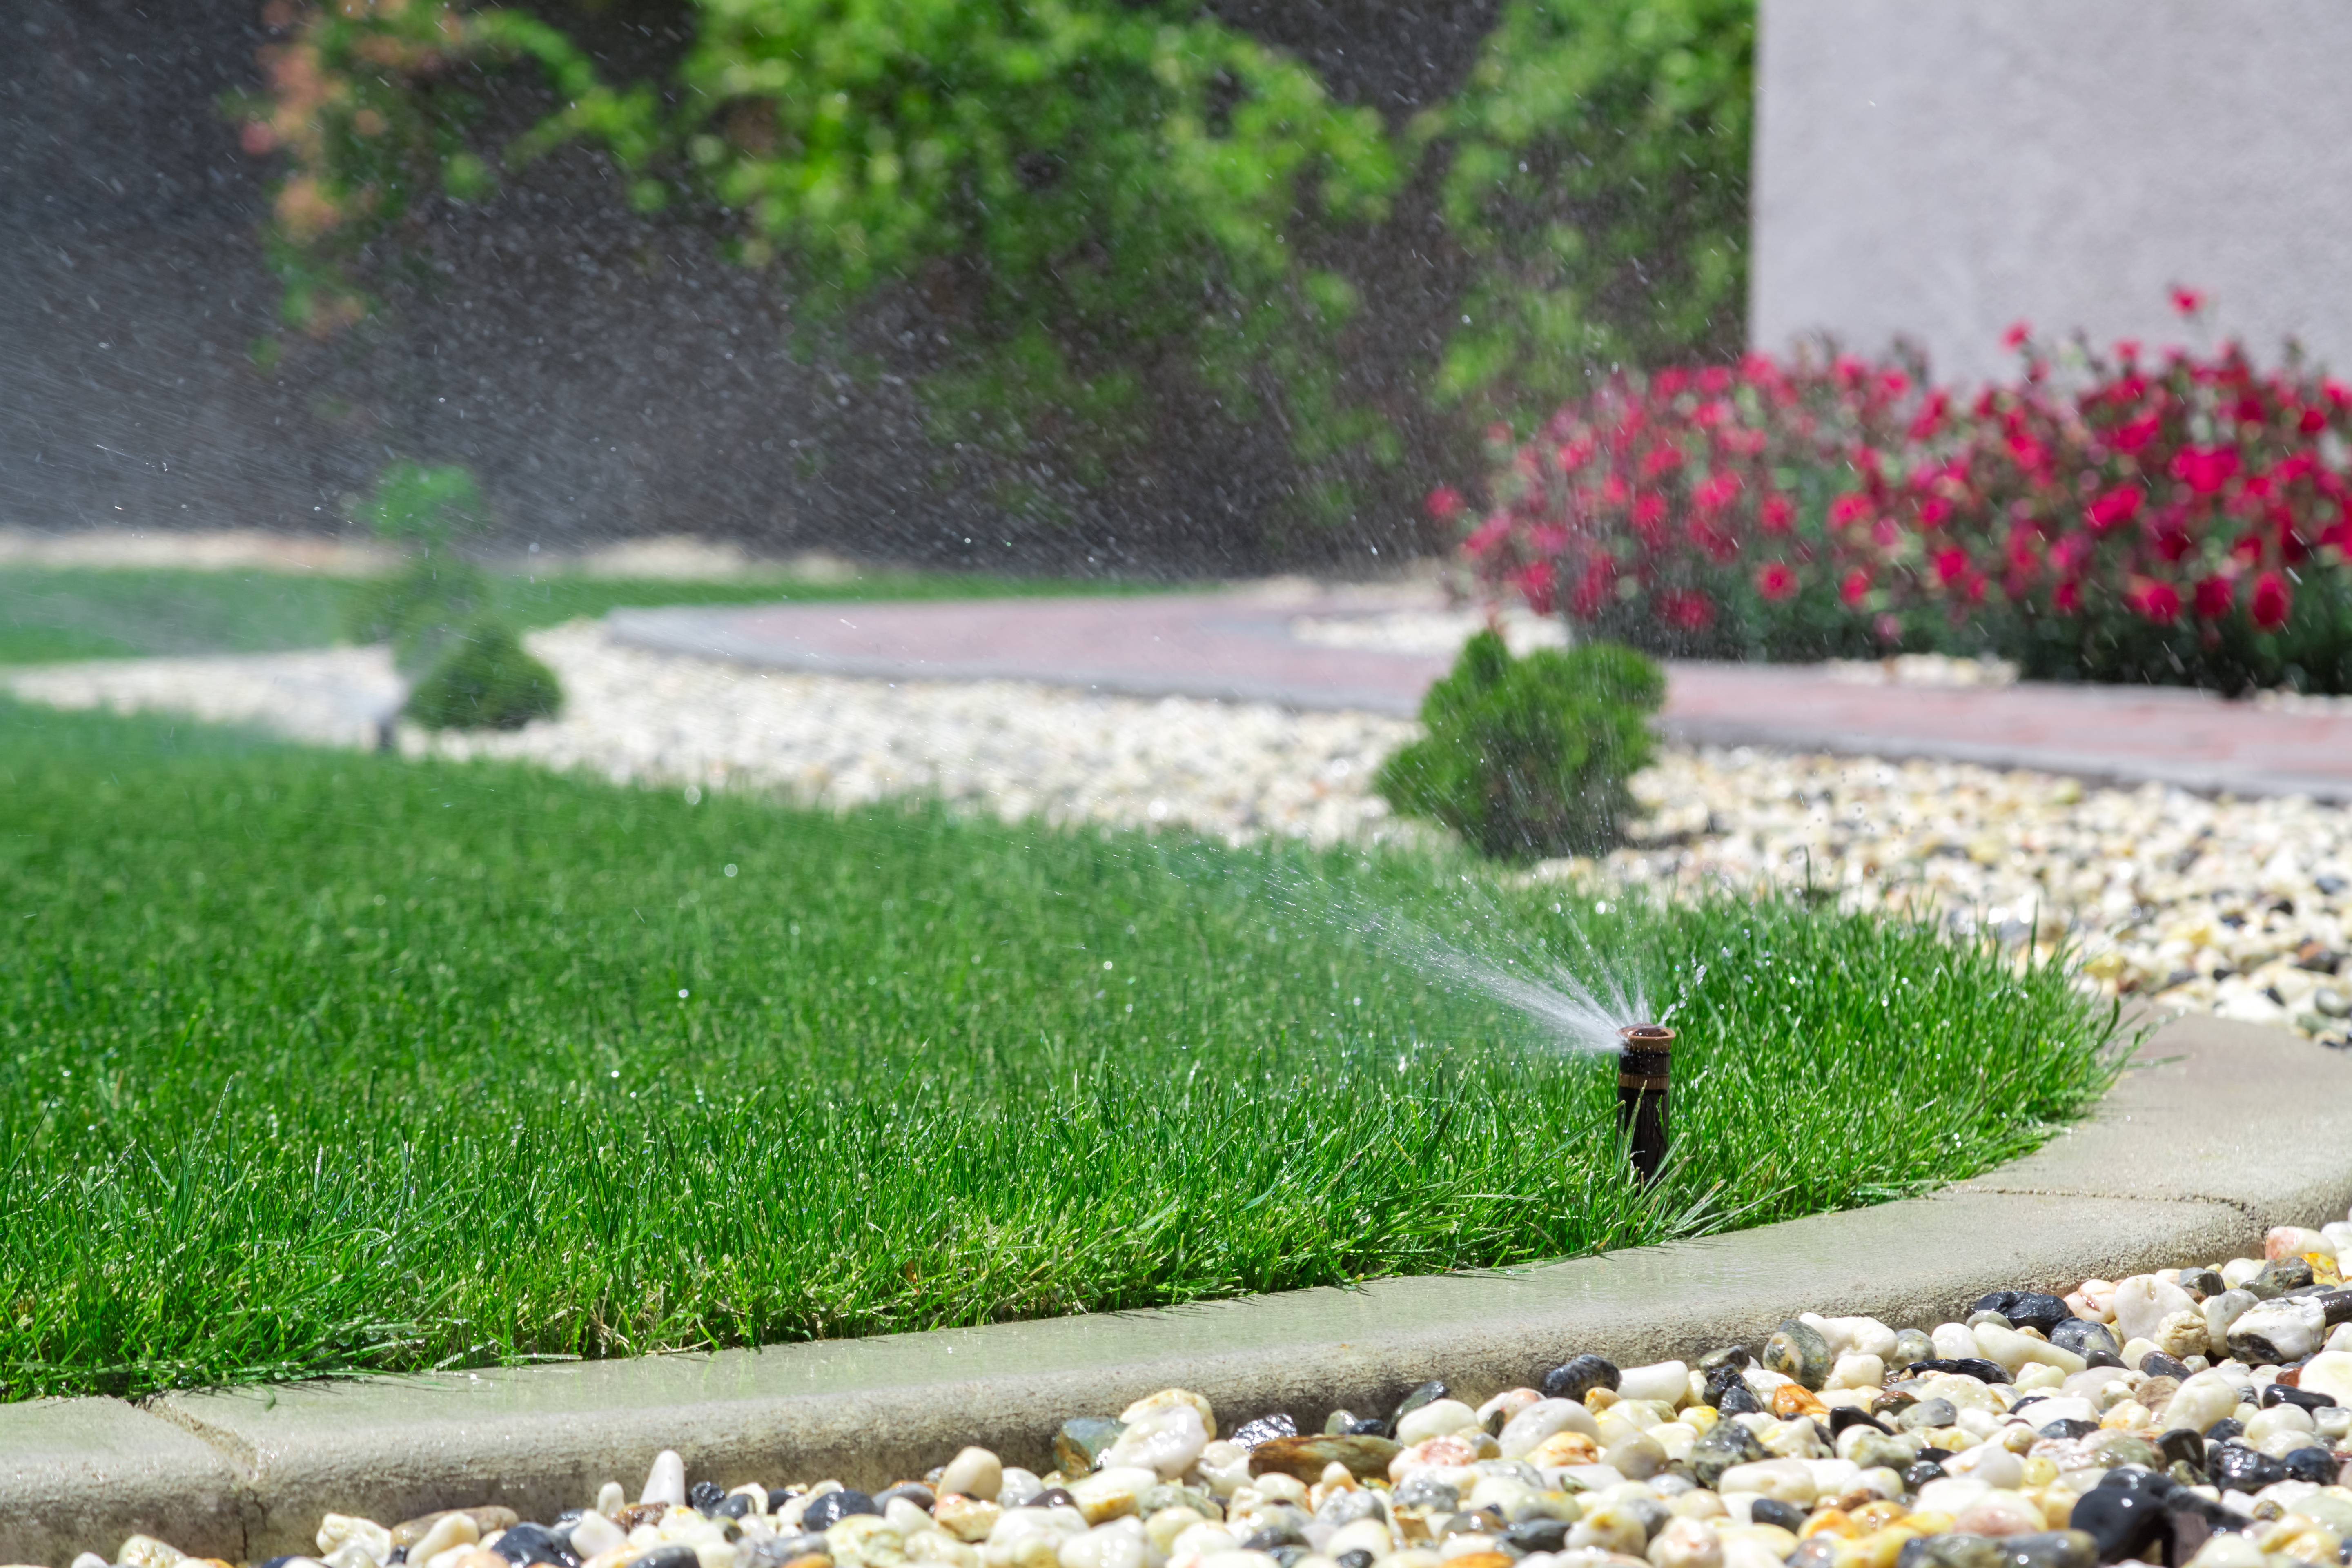 A sprinkler watering a green lawn